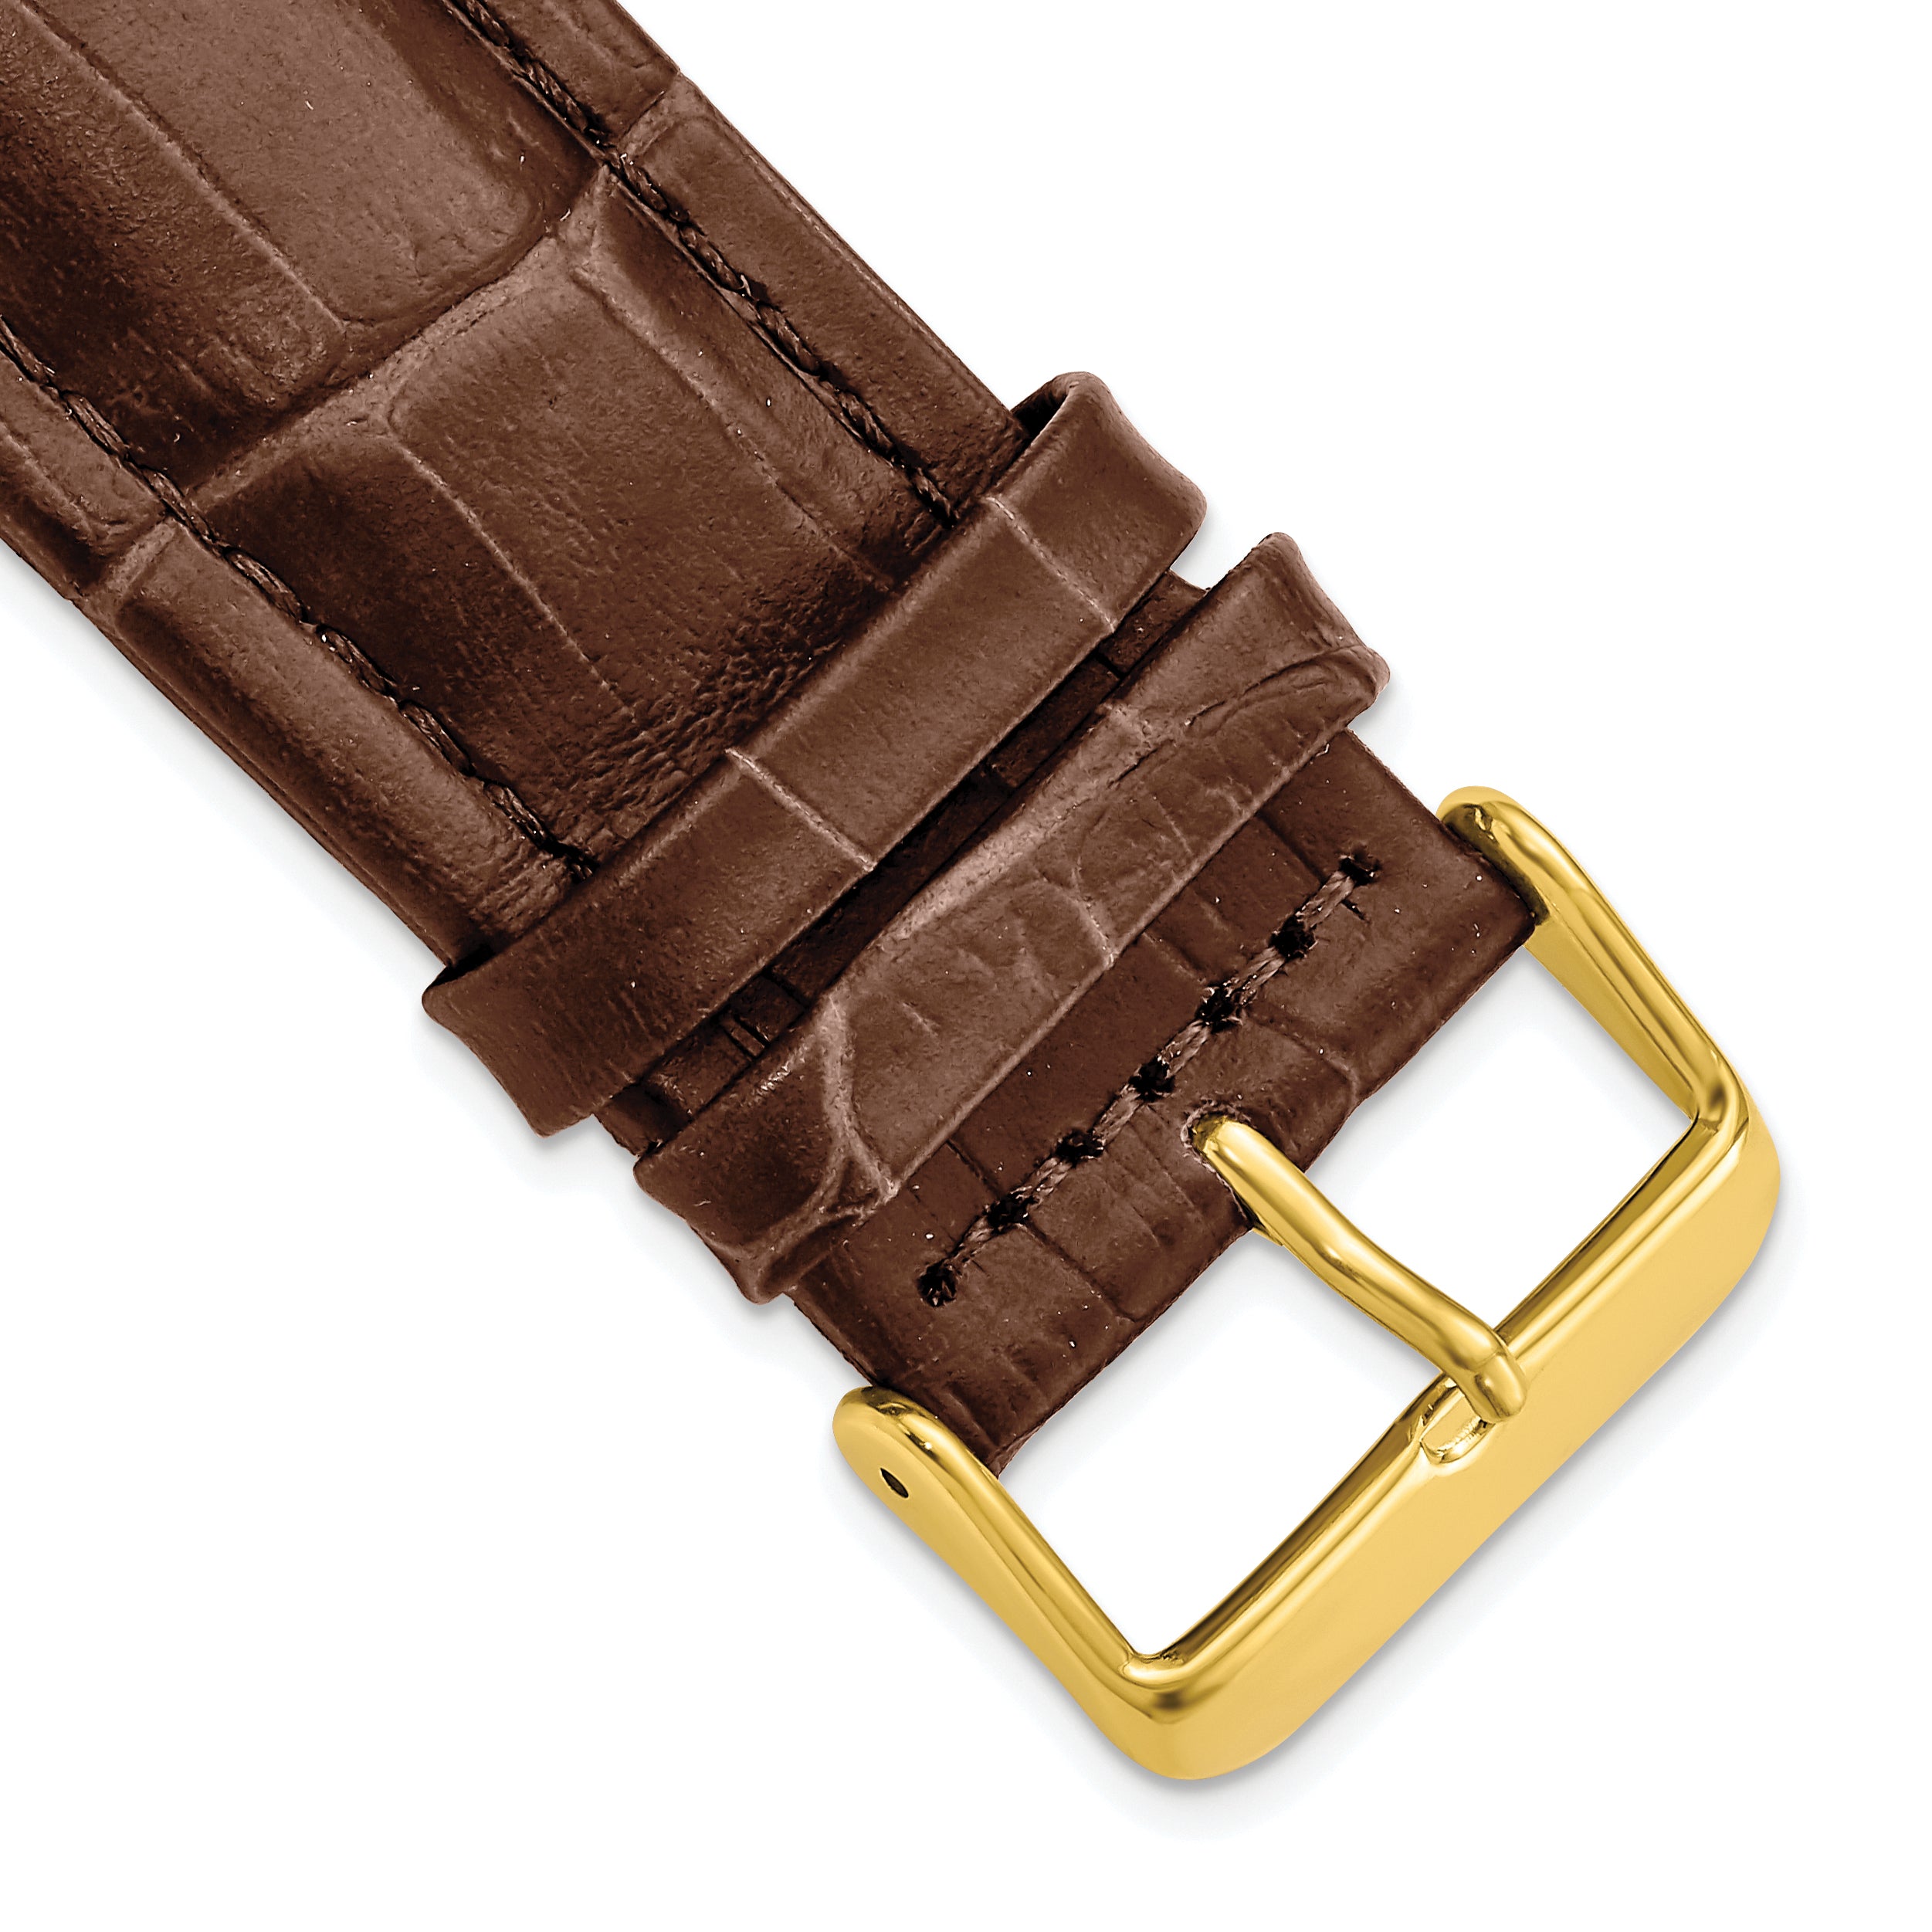 DeBeer 26mm Havana Matte Alligator Grain Leather with Gold-tone Buckle 7.5 inch Watch Band